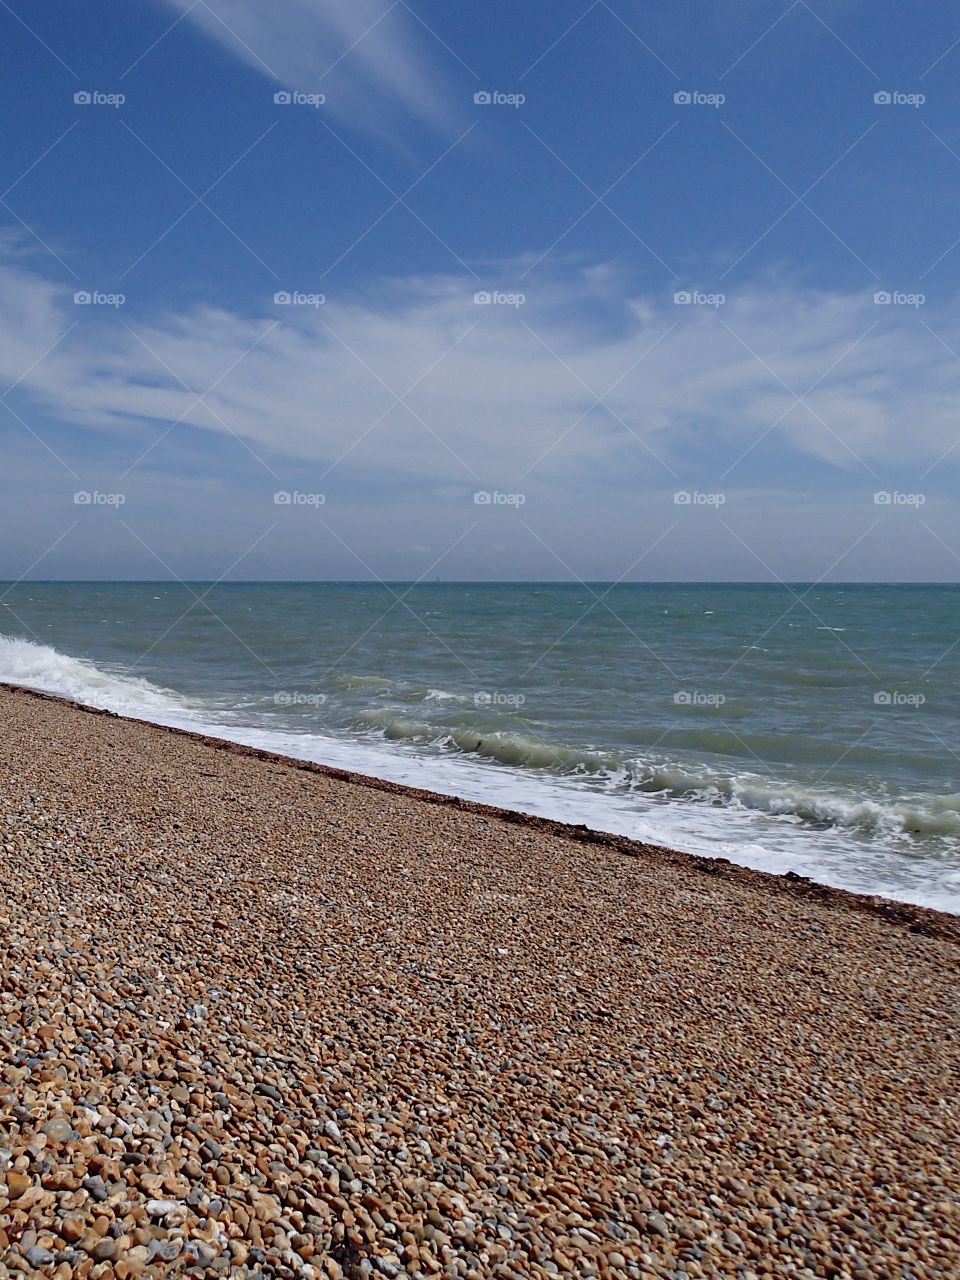 Rocky beach with waves near Folkestone in England on the Atlantic Ocean on a sunny summer day. 